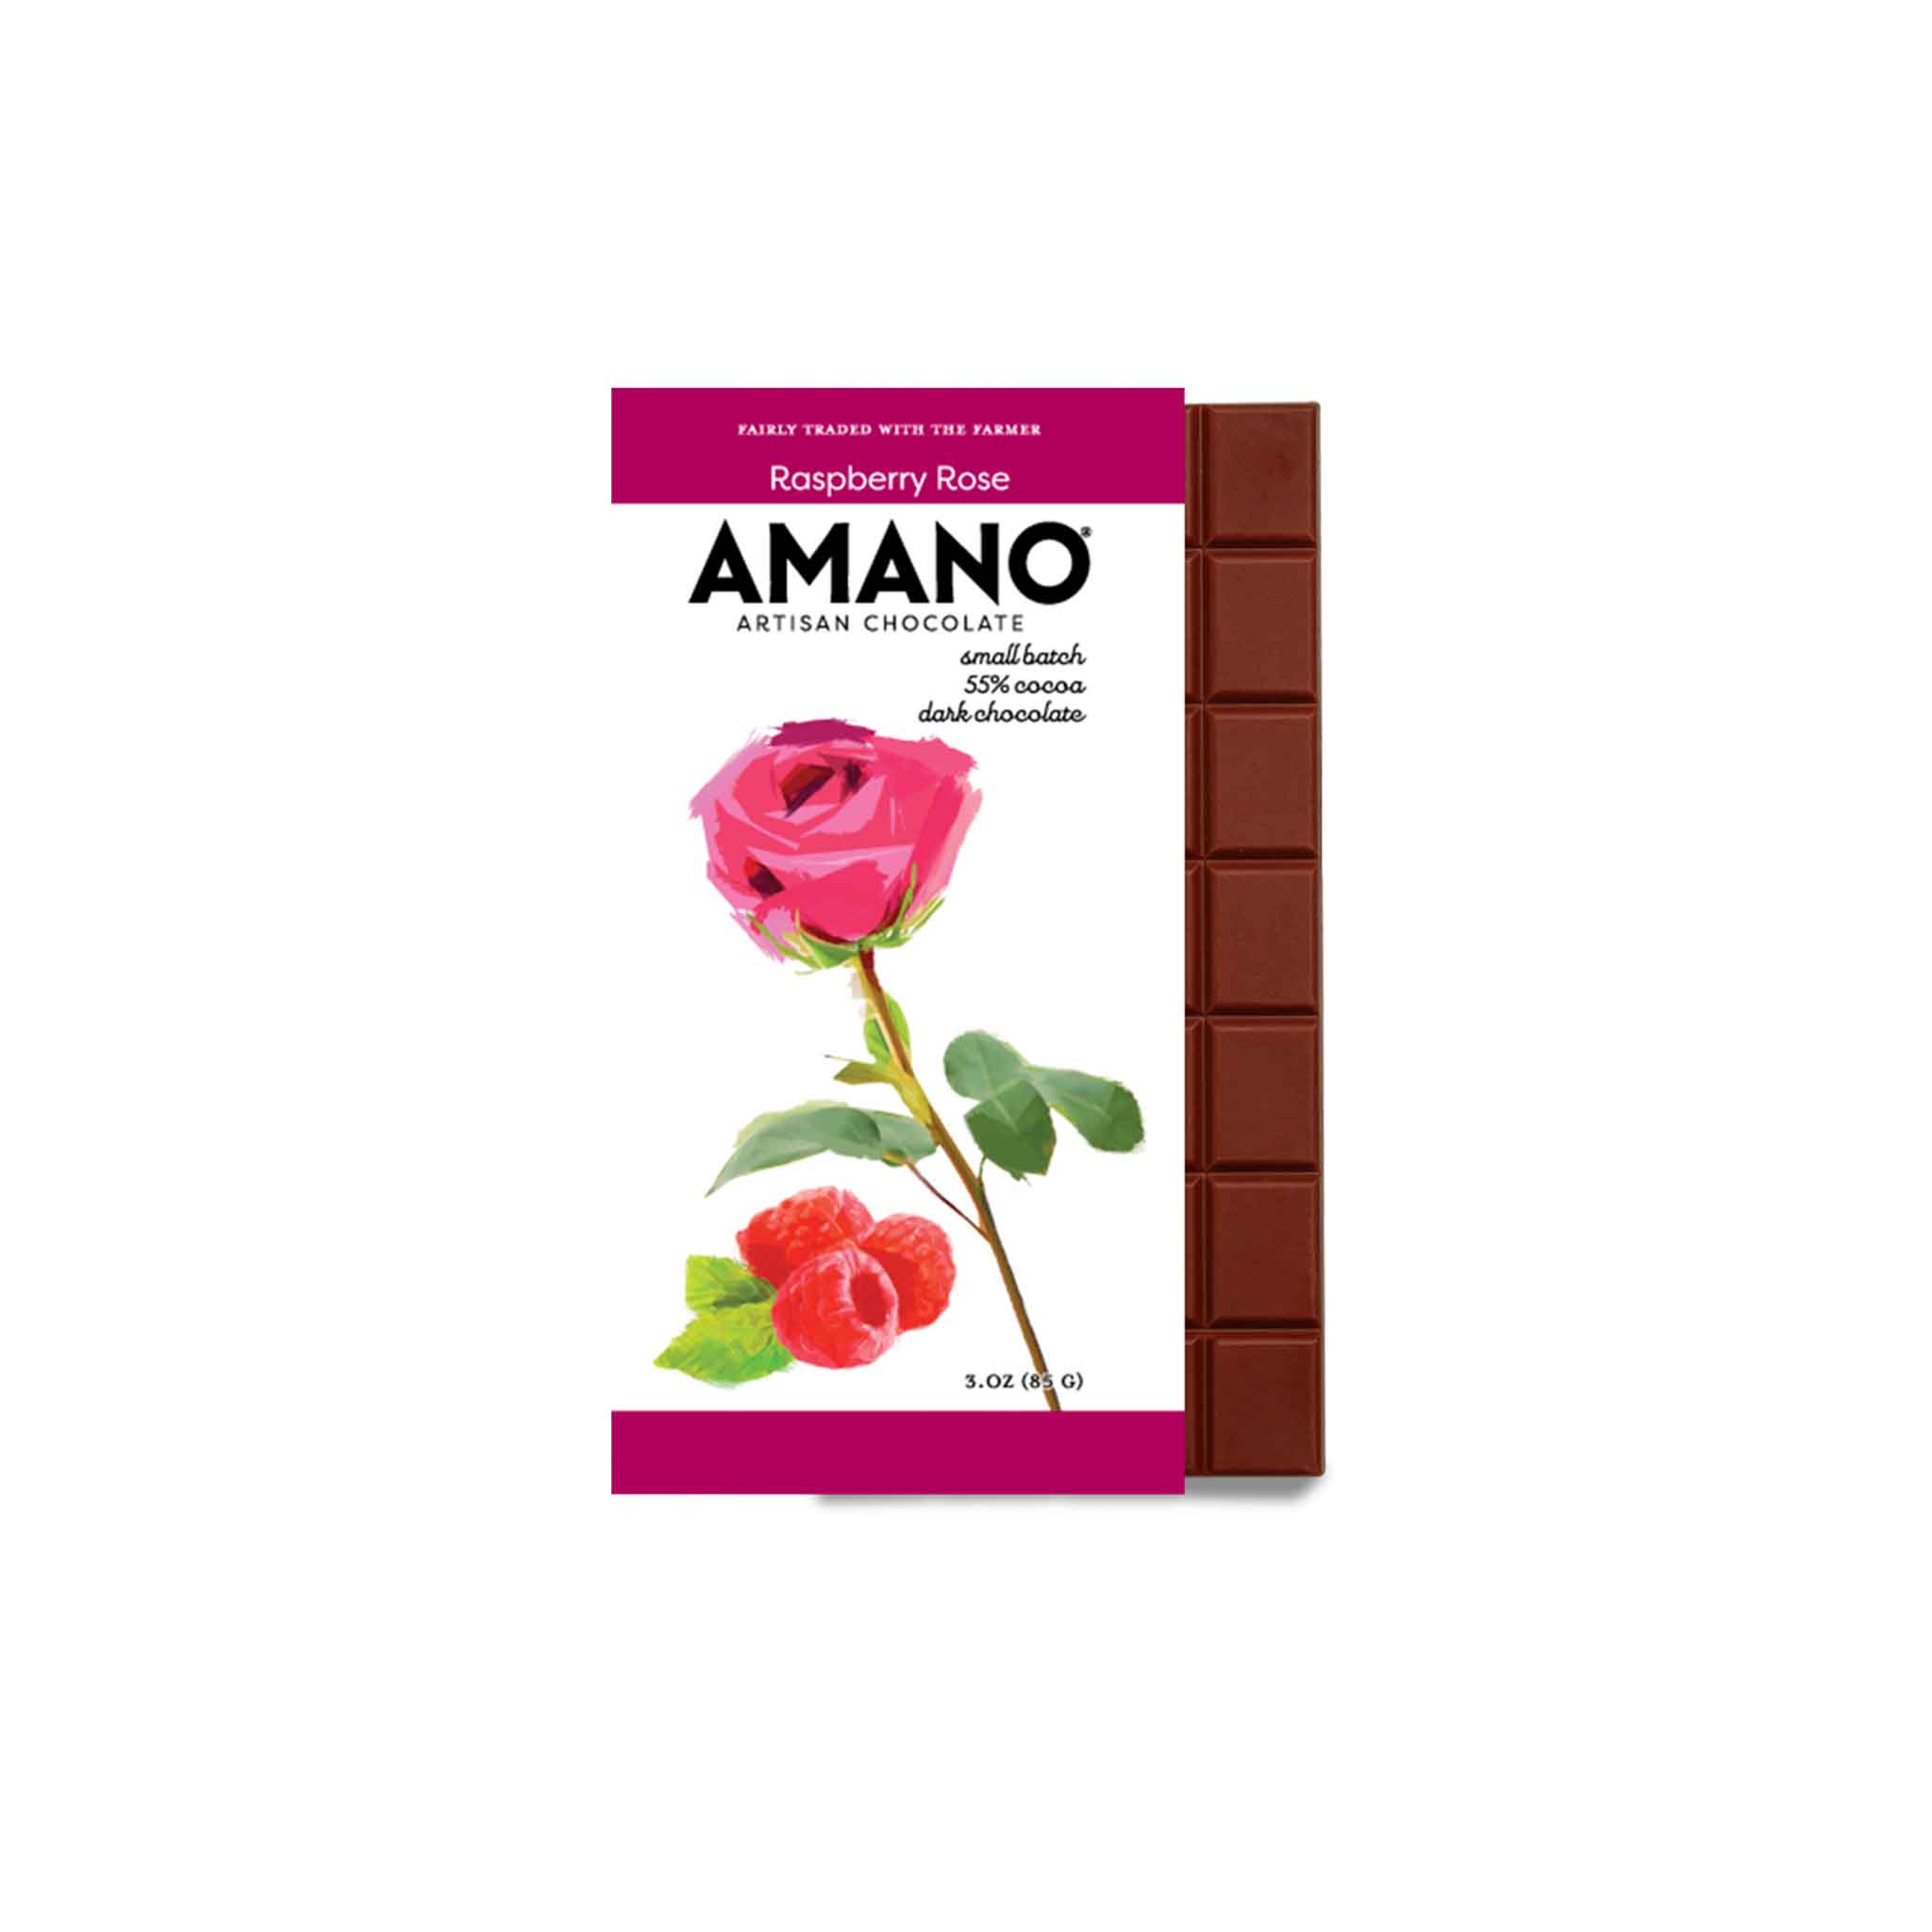 AMANO RASPBERRY ROSE 55% DARK CHOCOLATE 3oz